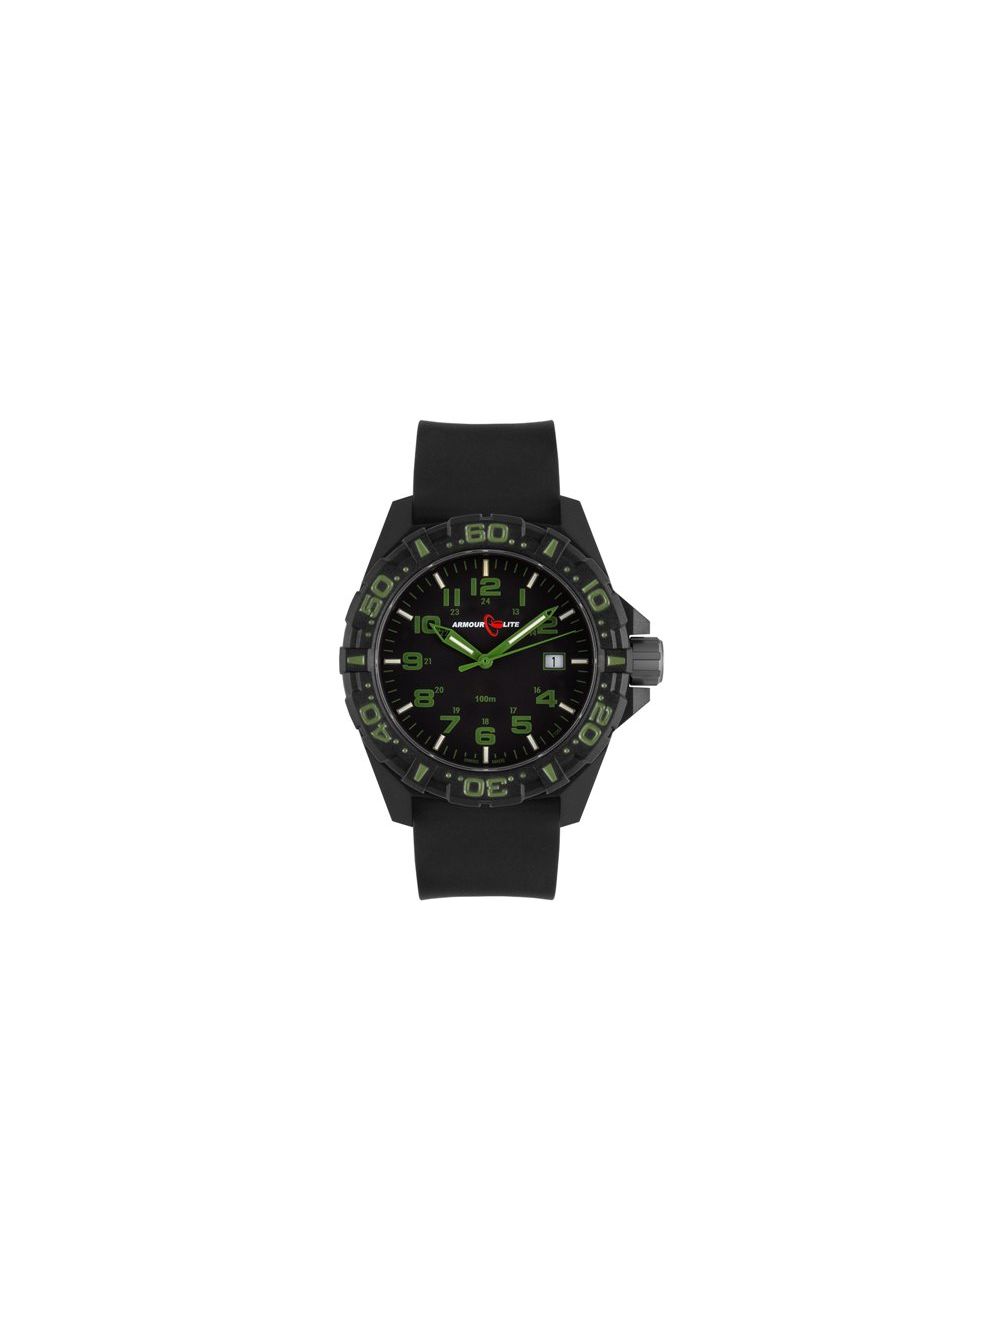 ArmourLite Operator Swiss Tritium Illuminated Watch - Clothing & Accessories